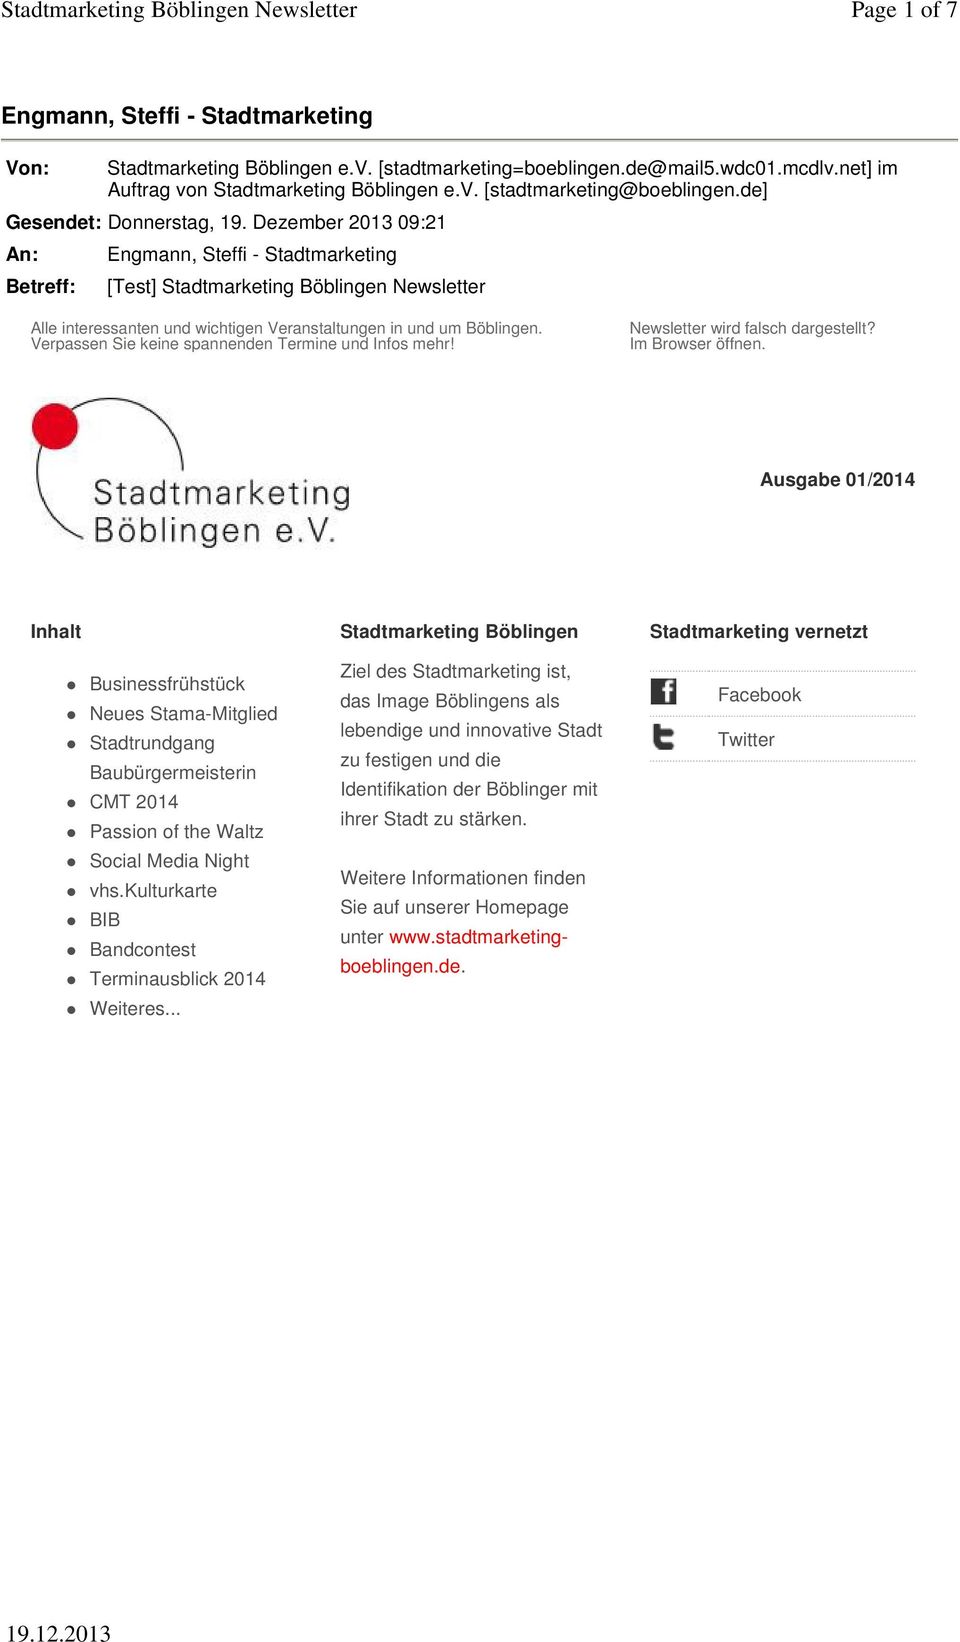 Dezember 2013 09:21 An: Betreff: Engmann, Steffi - Stadtmarketing [Test] Stadtmarketing Böblingen Newsletter Alle interessanten und wichtigen Veranstaltungen in und um Böblingen.